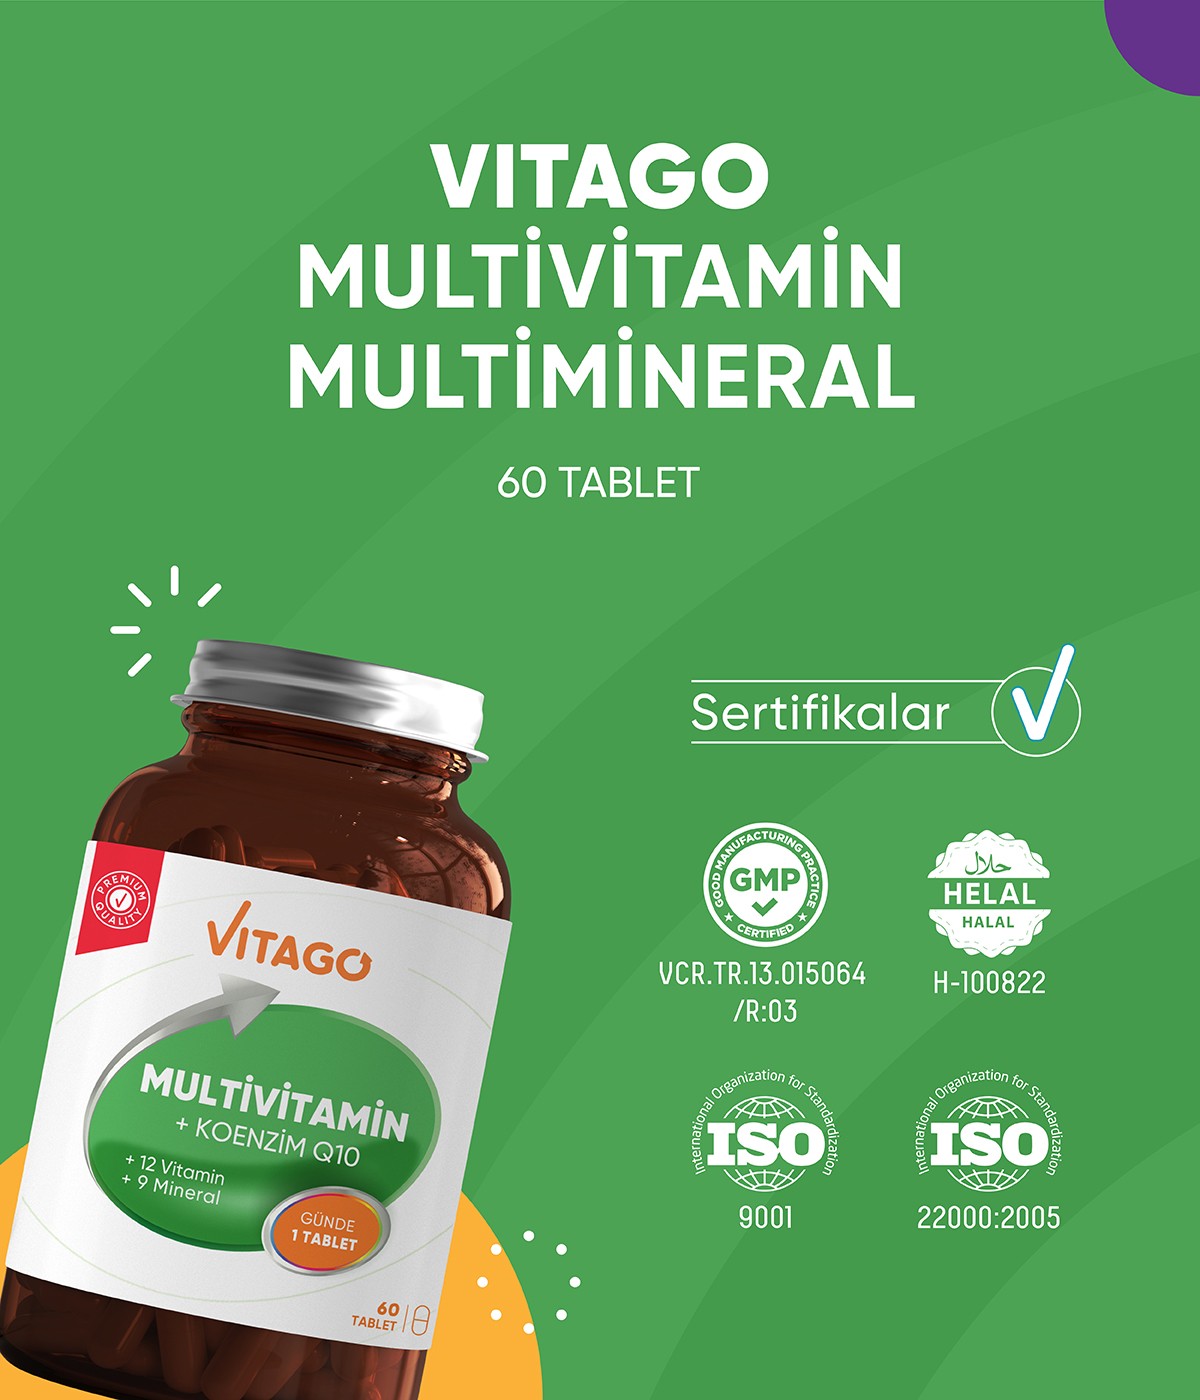 Vitago Multivitamin Koenzim Q-10 Tablet Takviye Edici Gıda